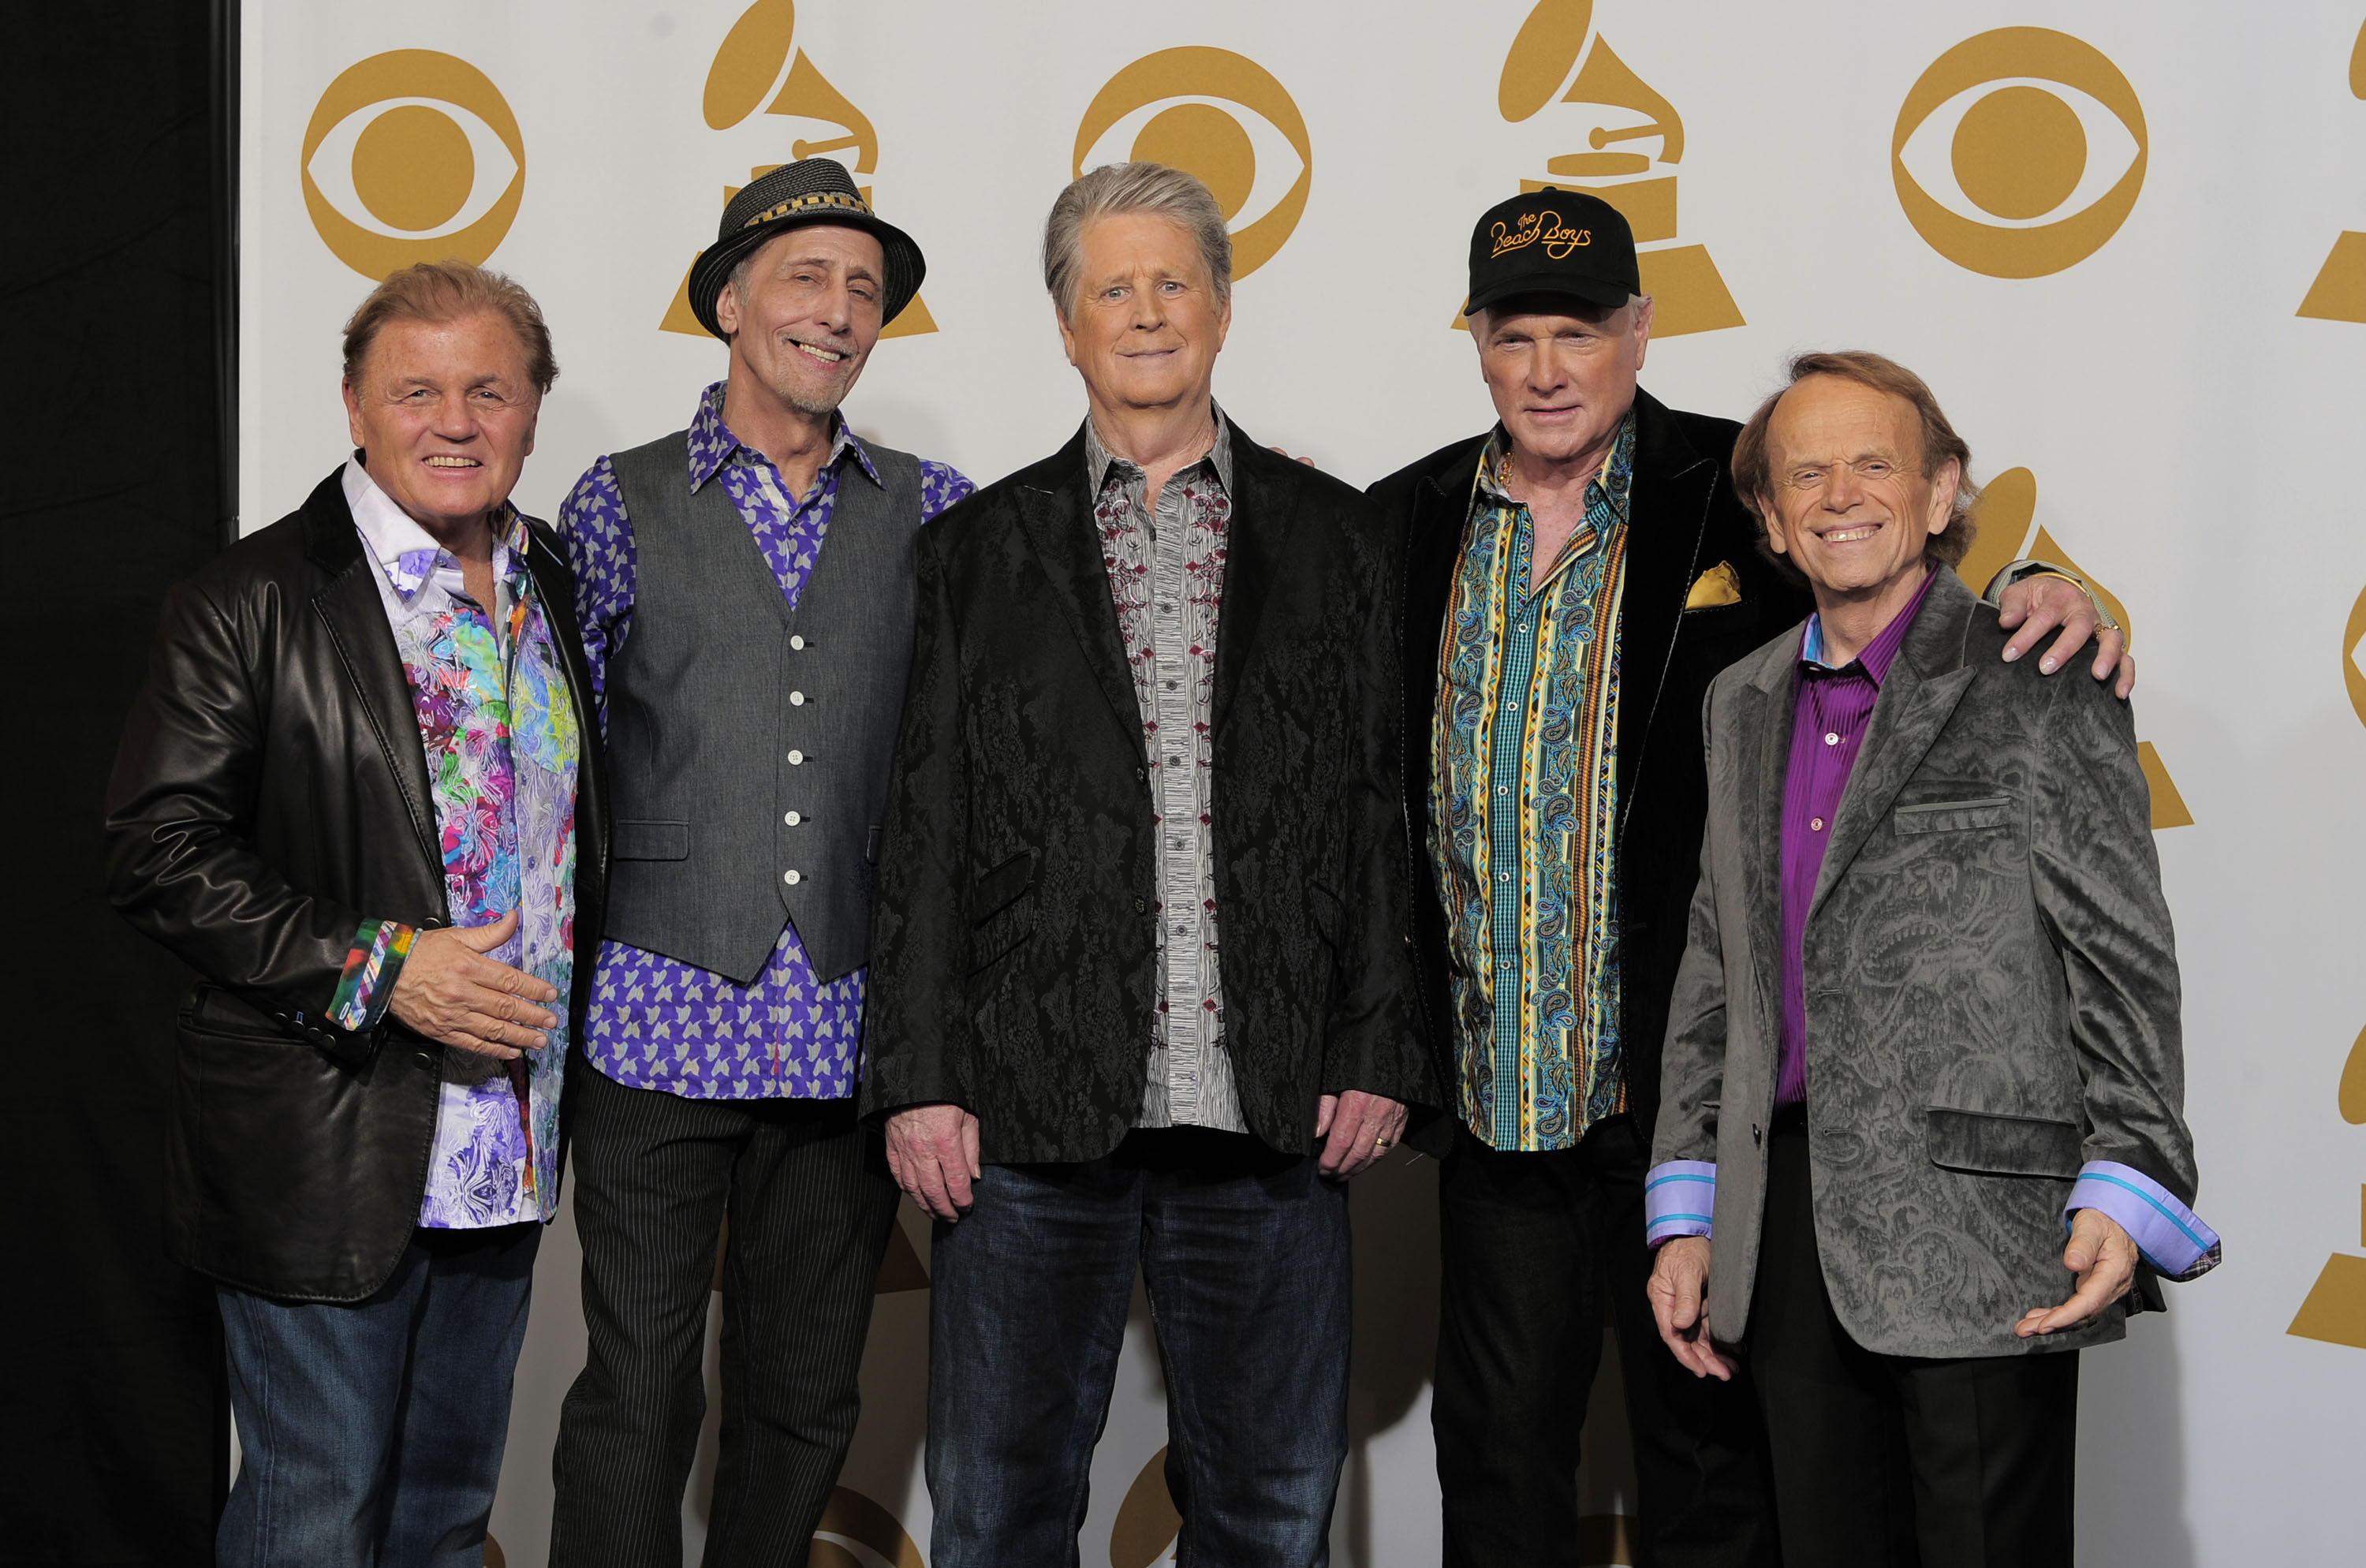 Beach Boys backstage at the Grammy Awards